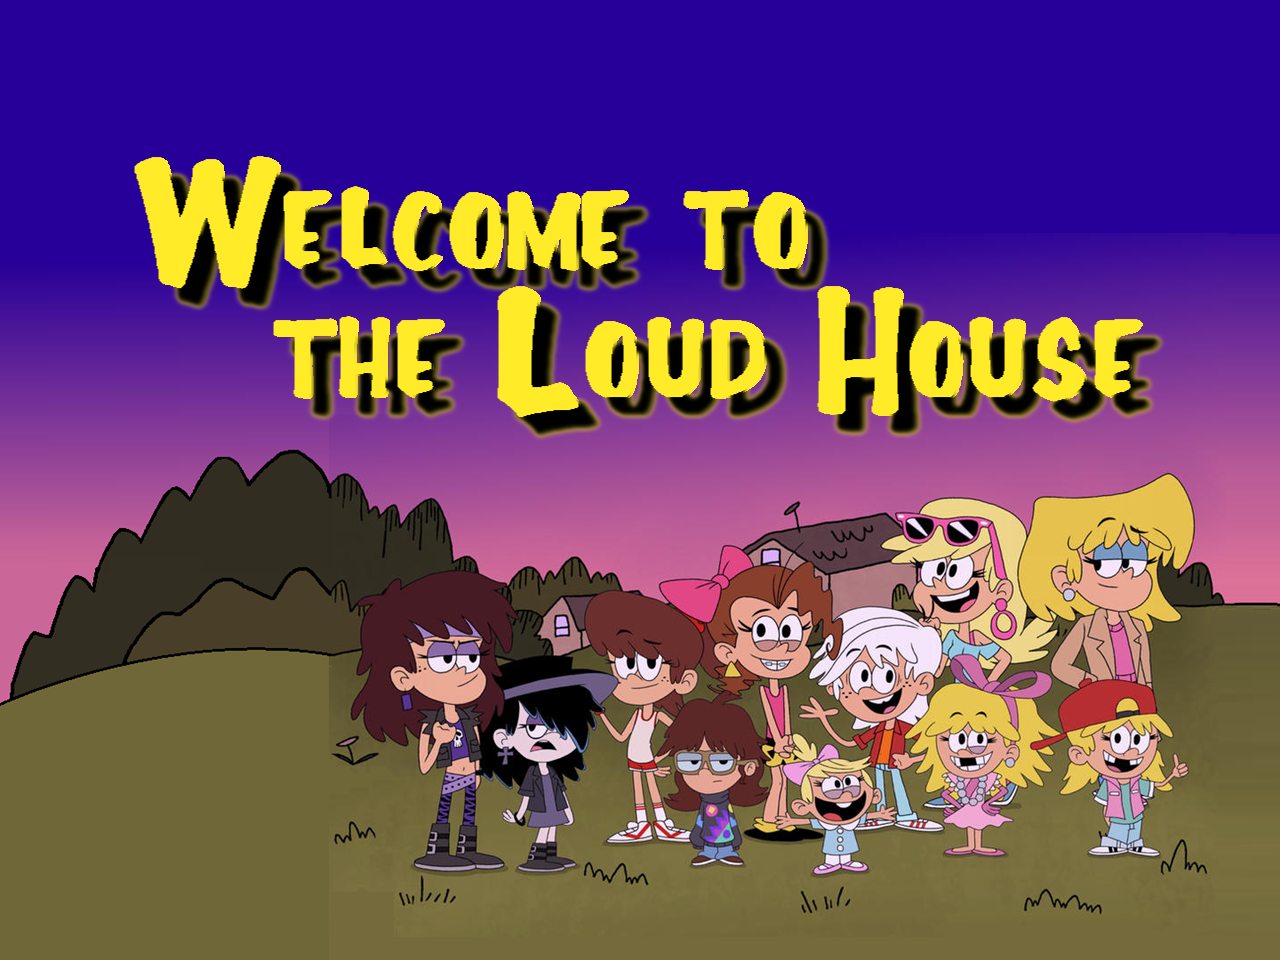 The Loud House Encyclopedia pic